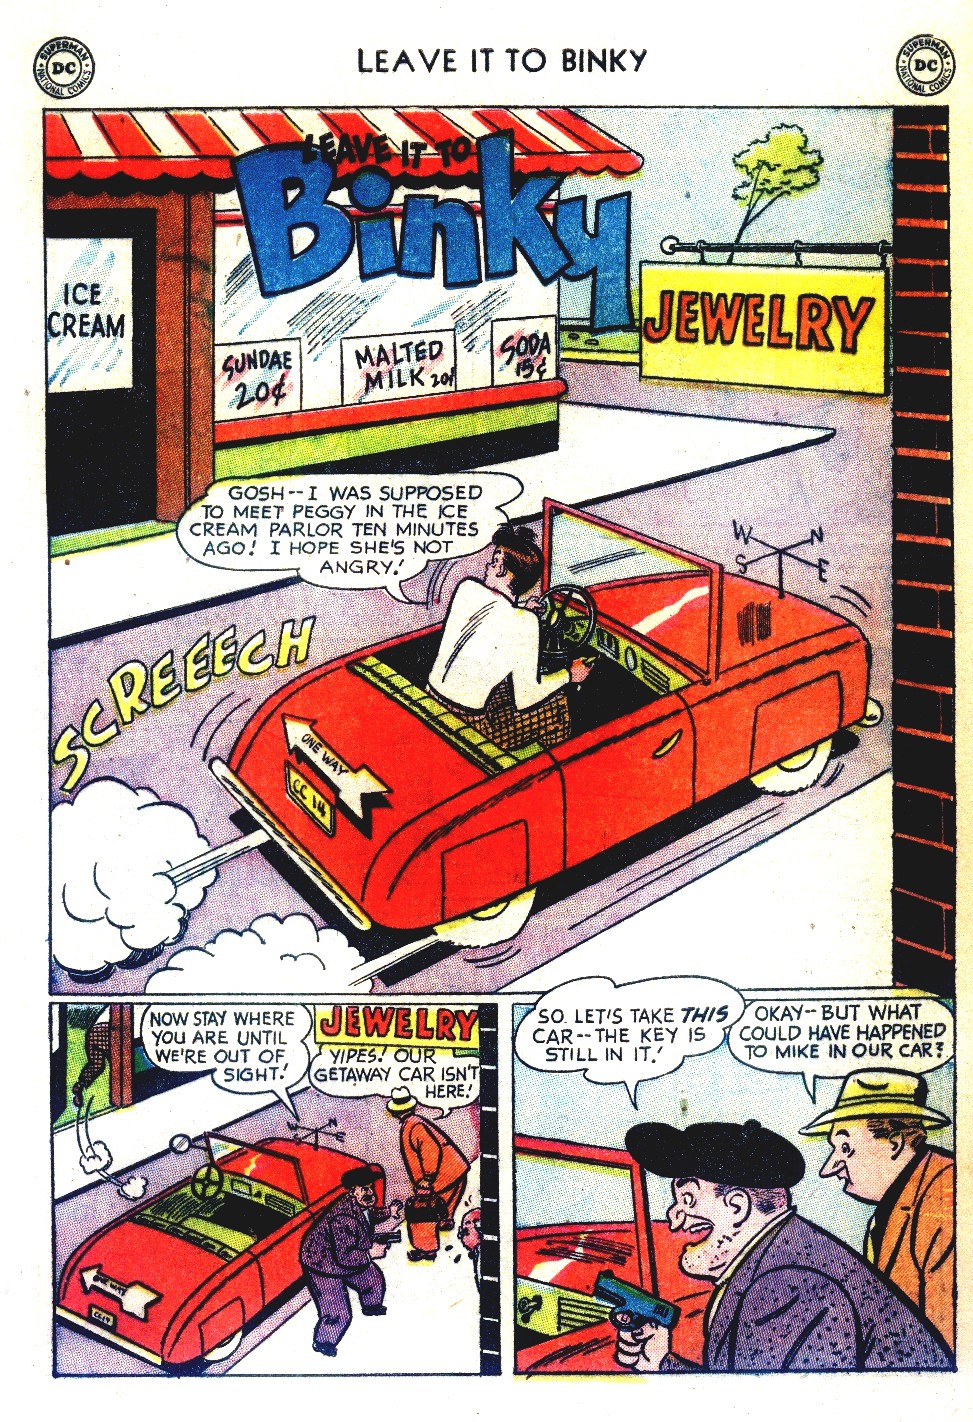 Read online Leave it to Binky comic -  Issue #24 - 11